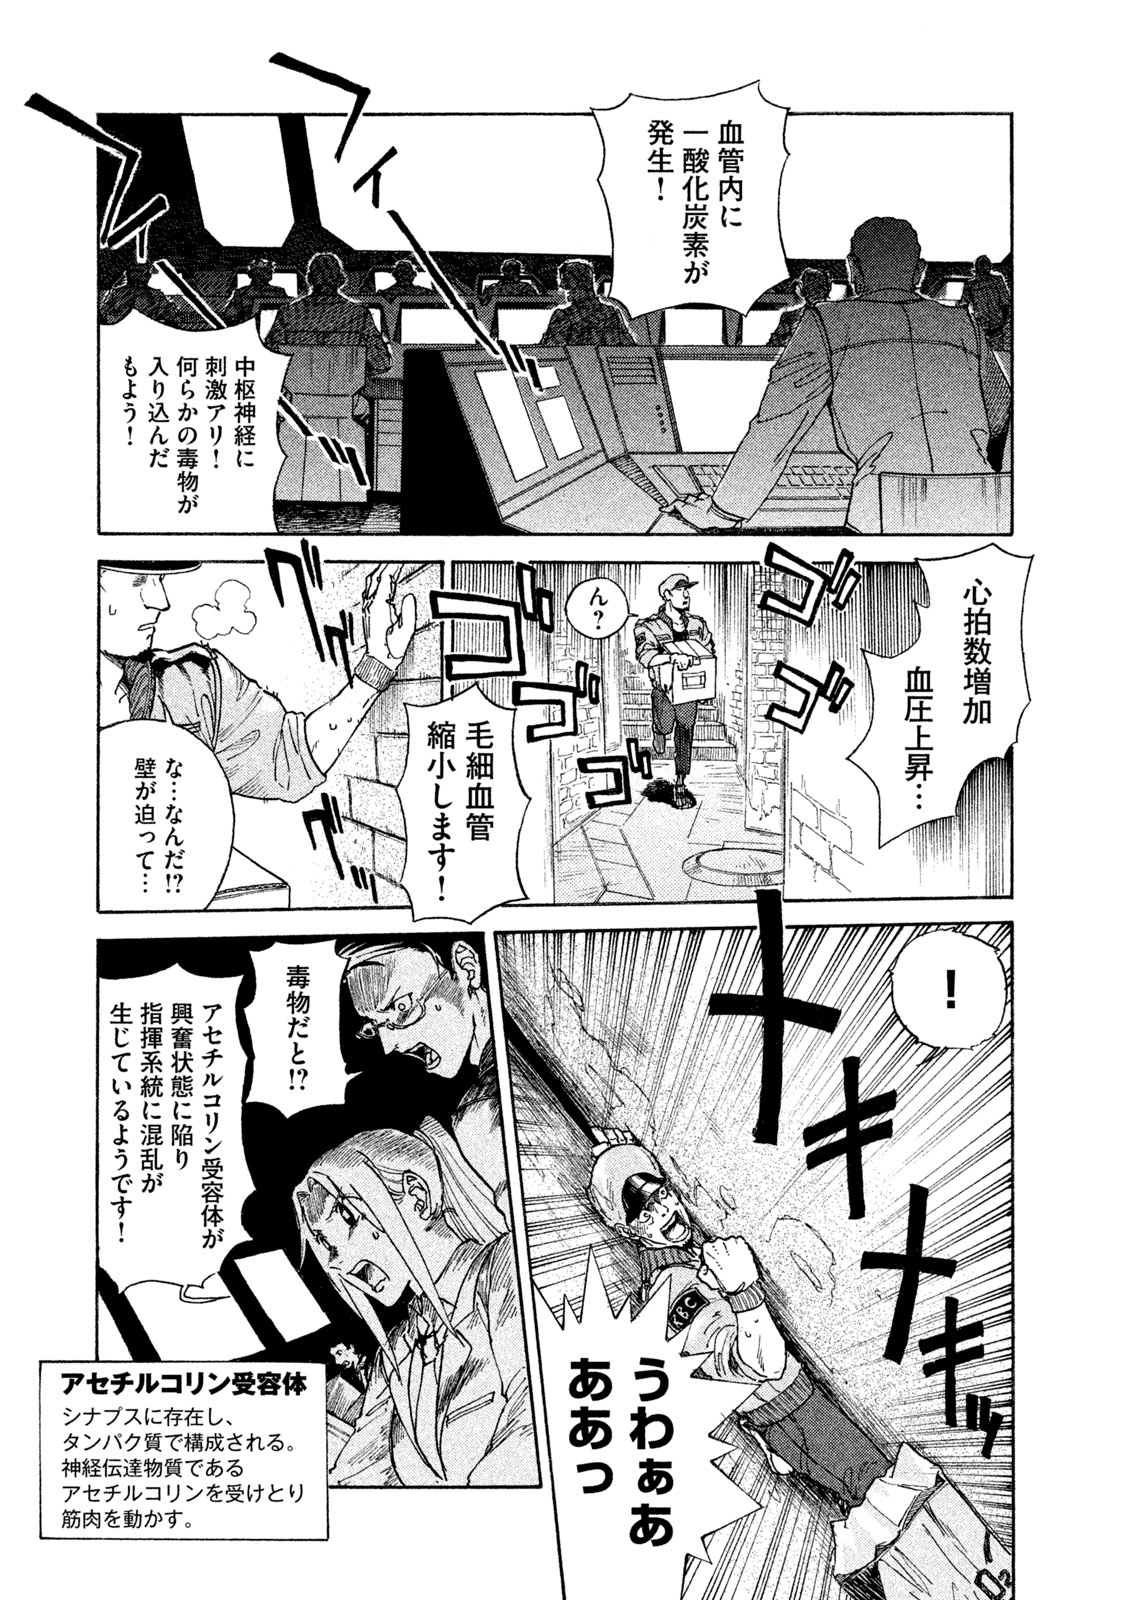 Hataraku Saibou BLACK - Chapter 1 - Page 19